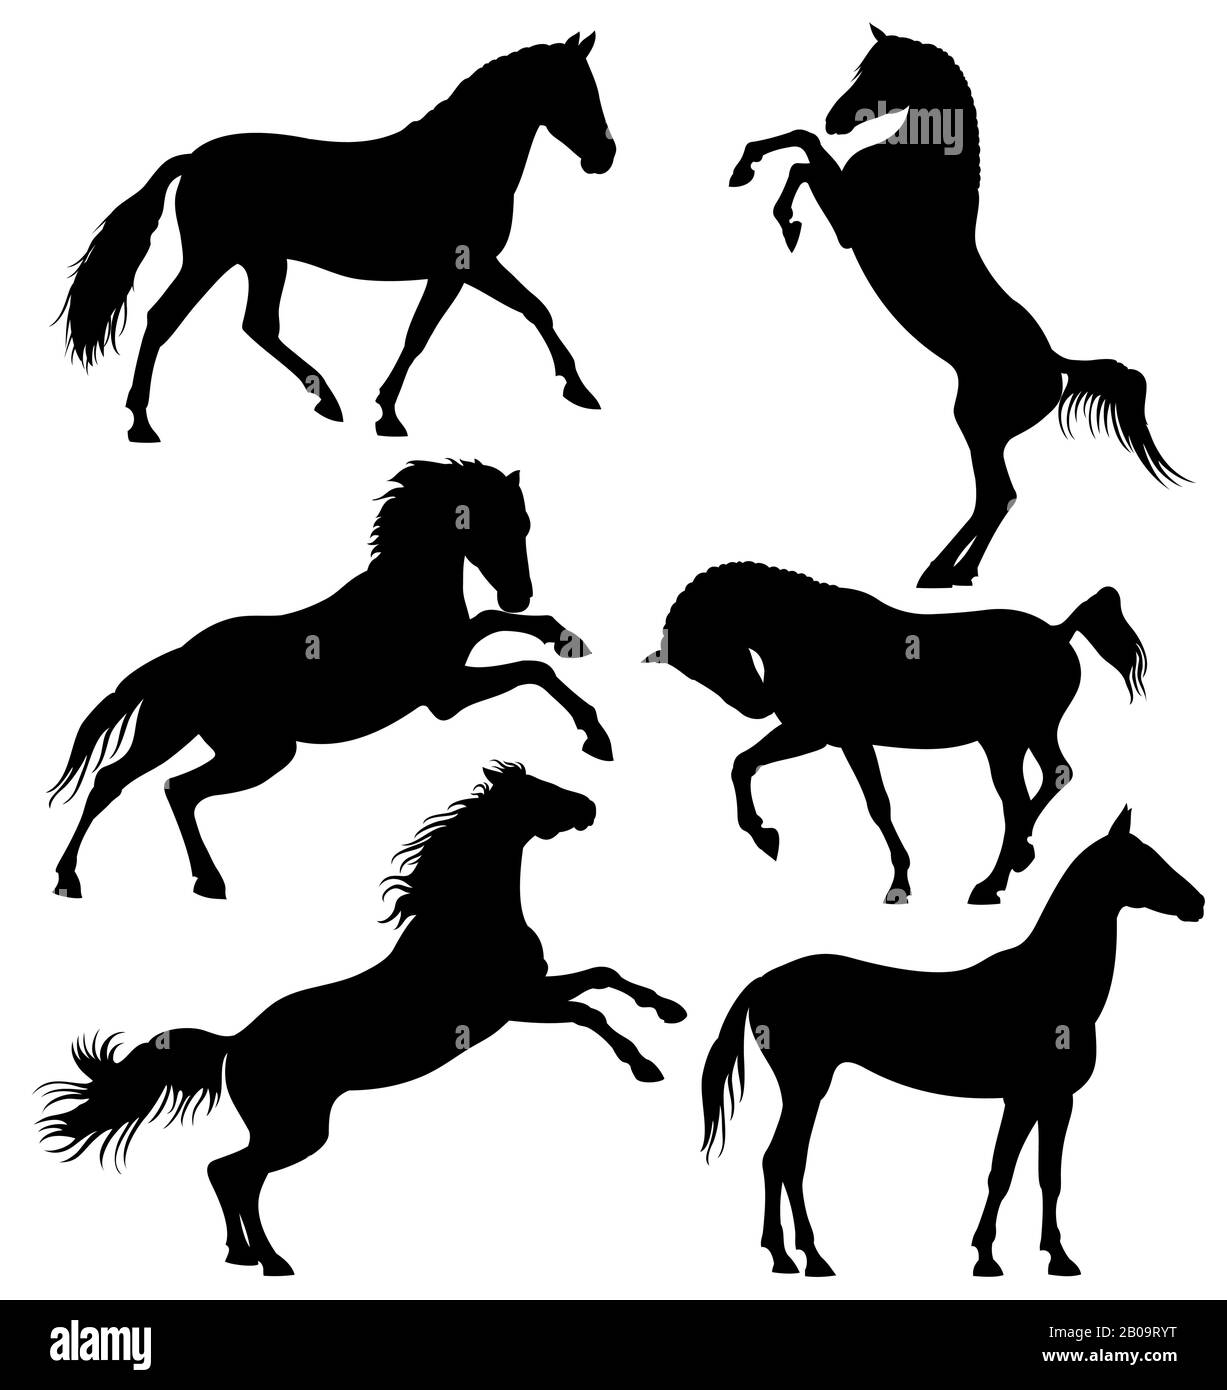 Dark wild horse, running horses vector silhouettes isolated on white background. Wild horse silhouettes, illustration of animal mammal speed horse Stock Vector